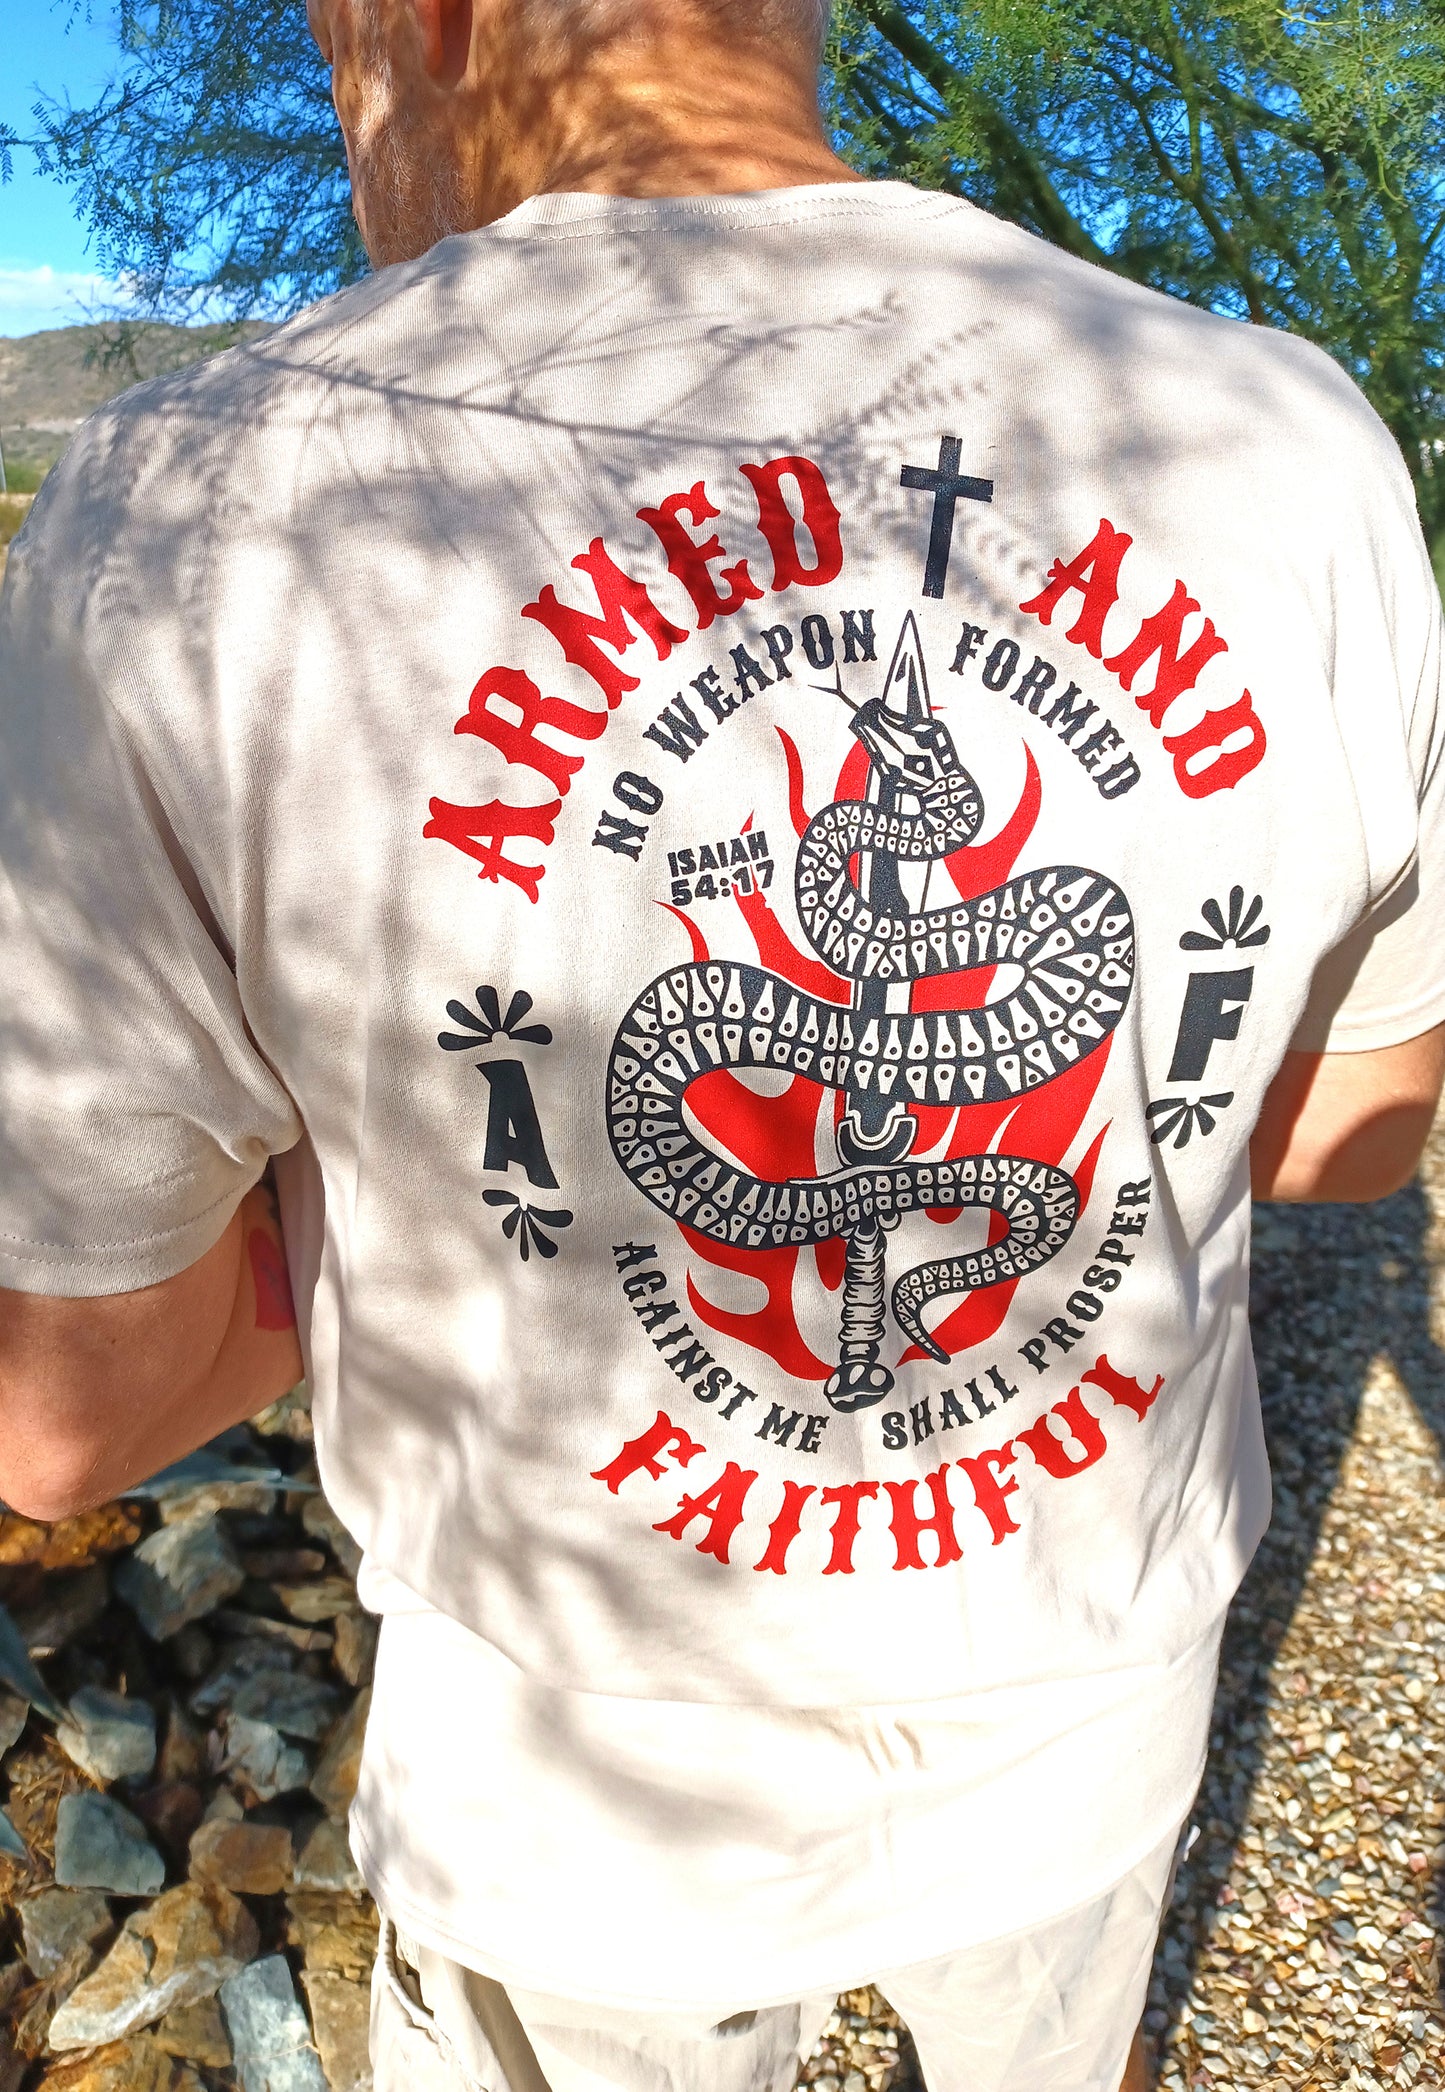 Armed and Faithful Christian patriotic tee shirt on model